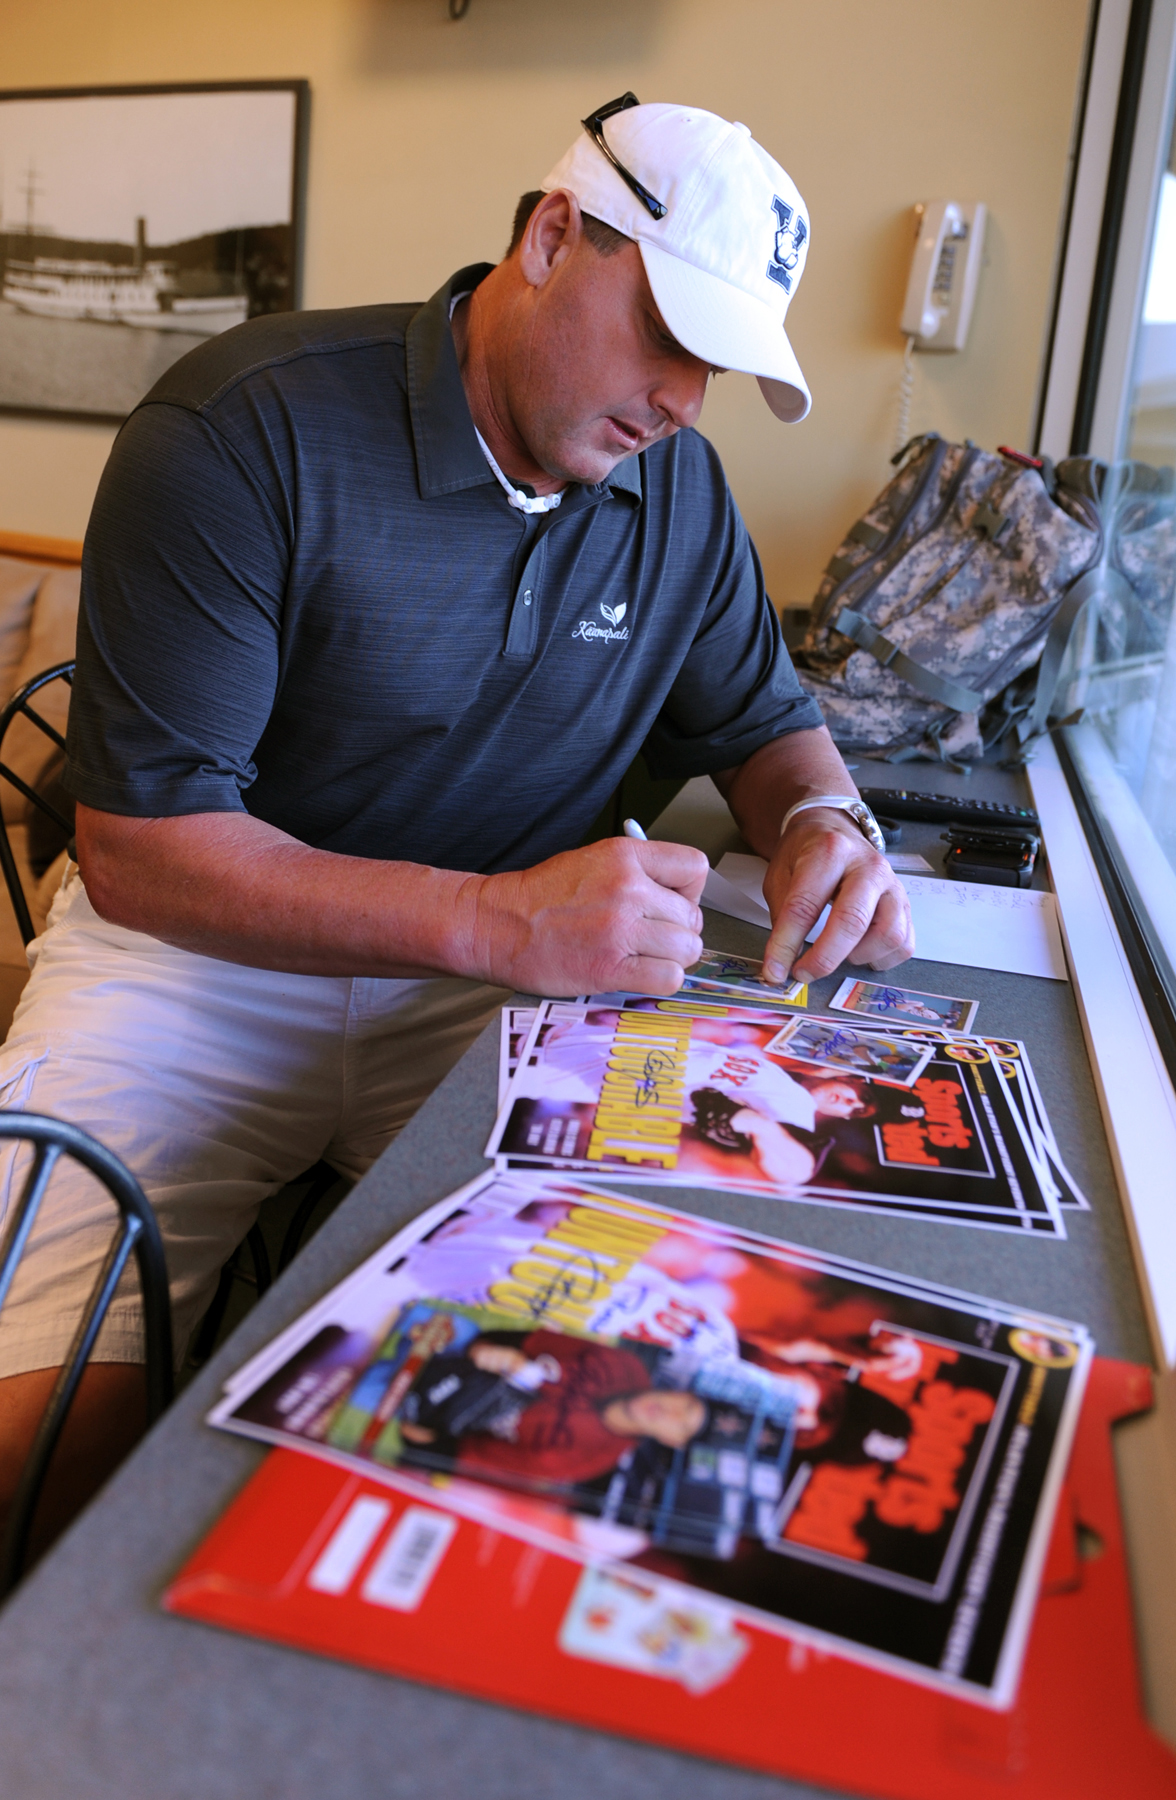 Detroit Tigers Baseball Cap, Kody Clemens Autographed – Roger Clemens  Foundation